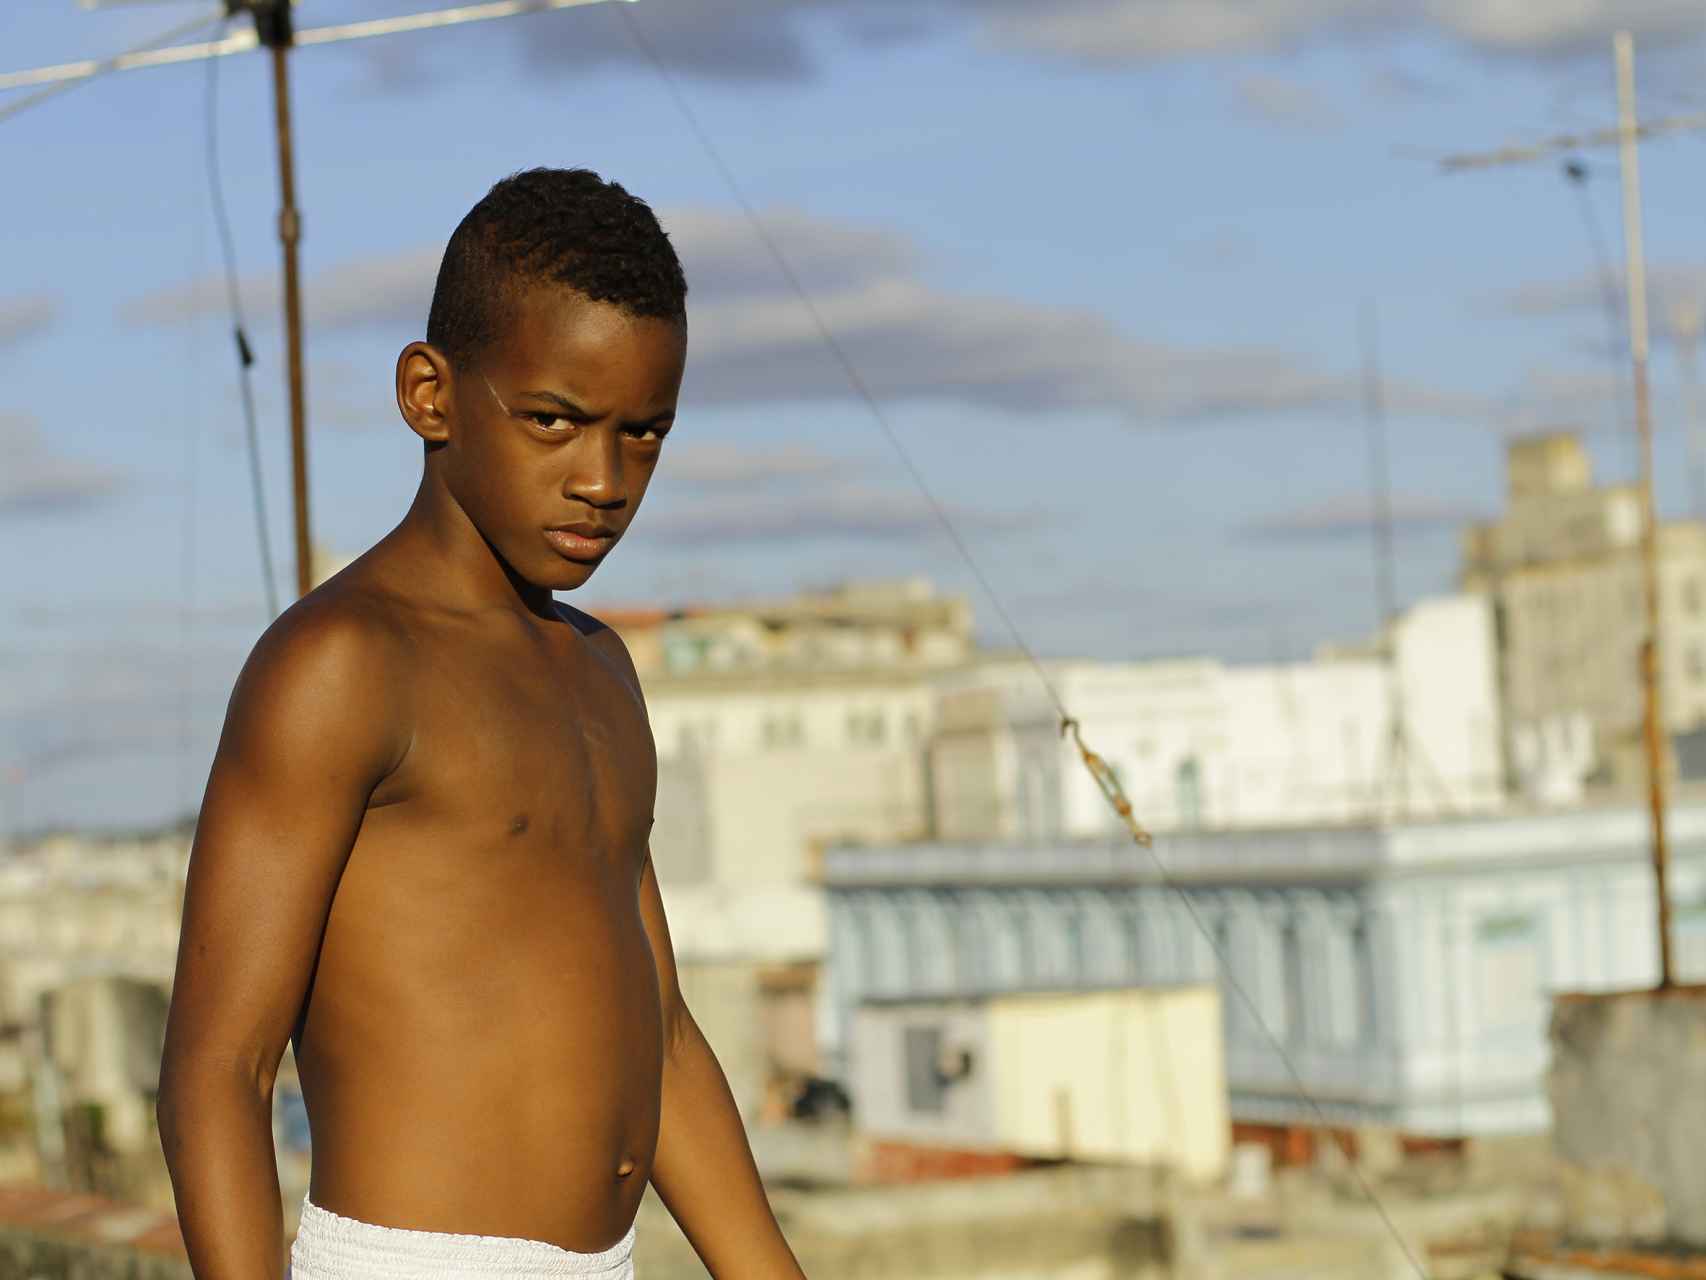 Albert, un joven aspirante a boxeador de La Habana, en el filme